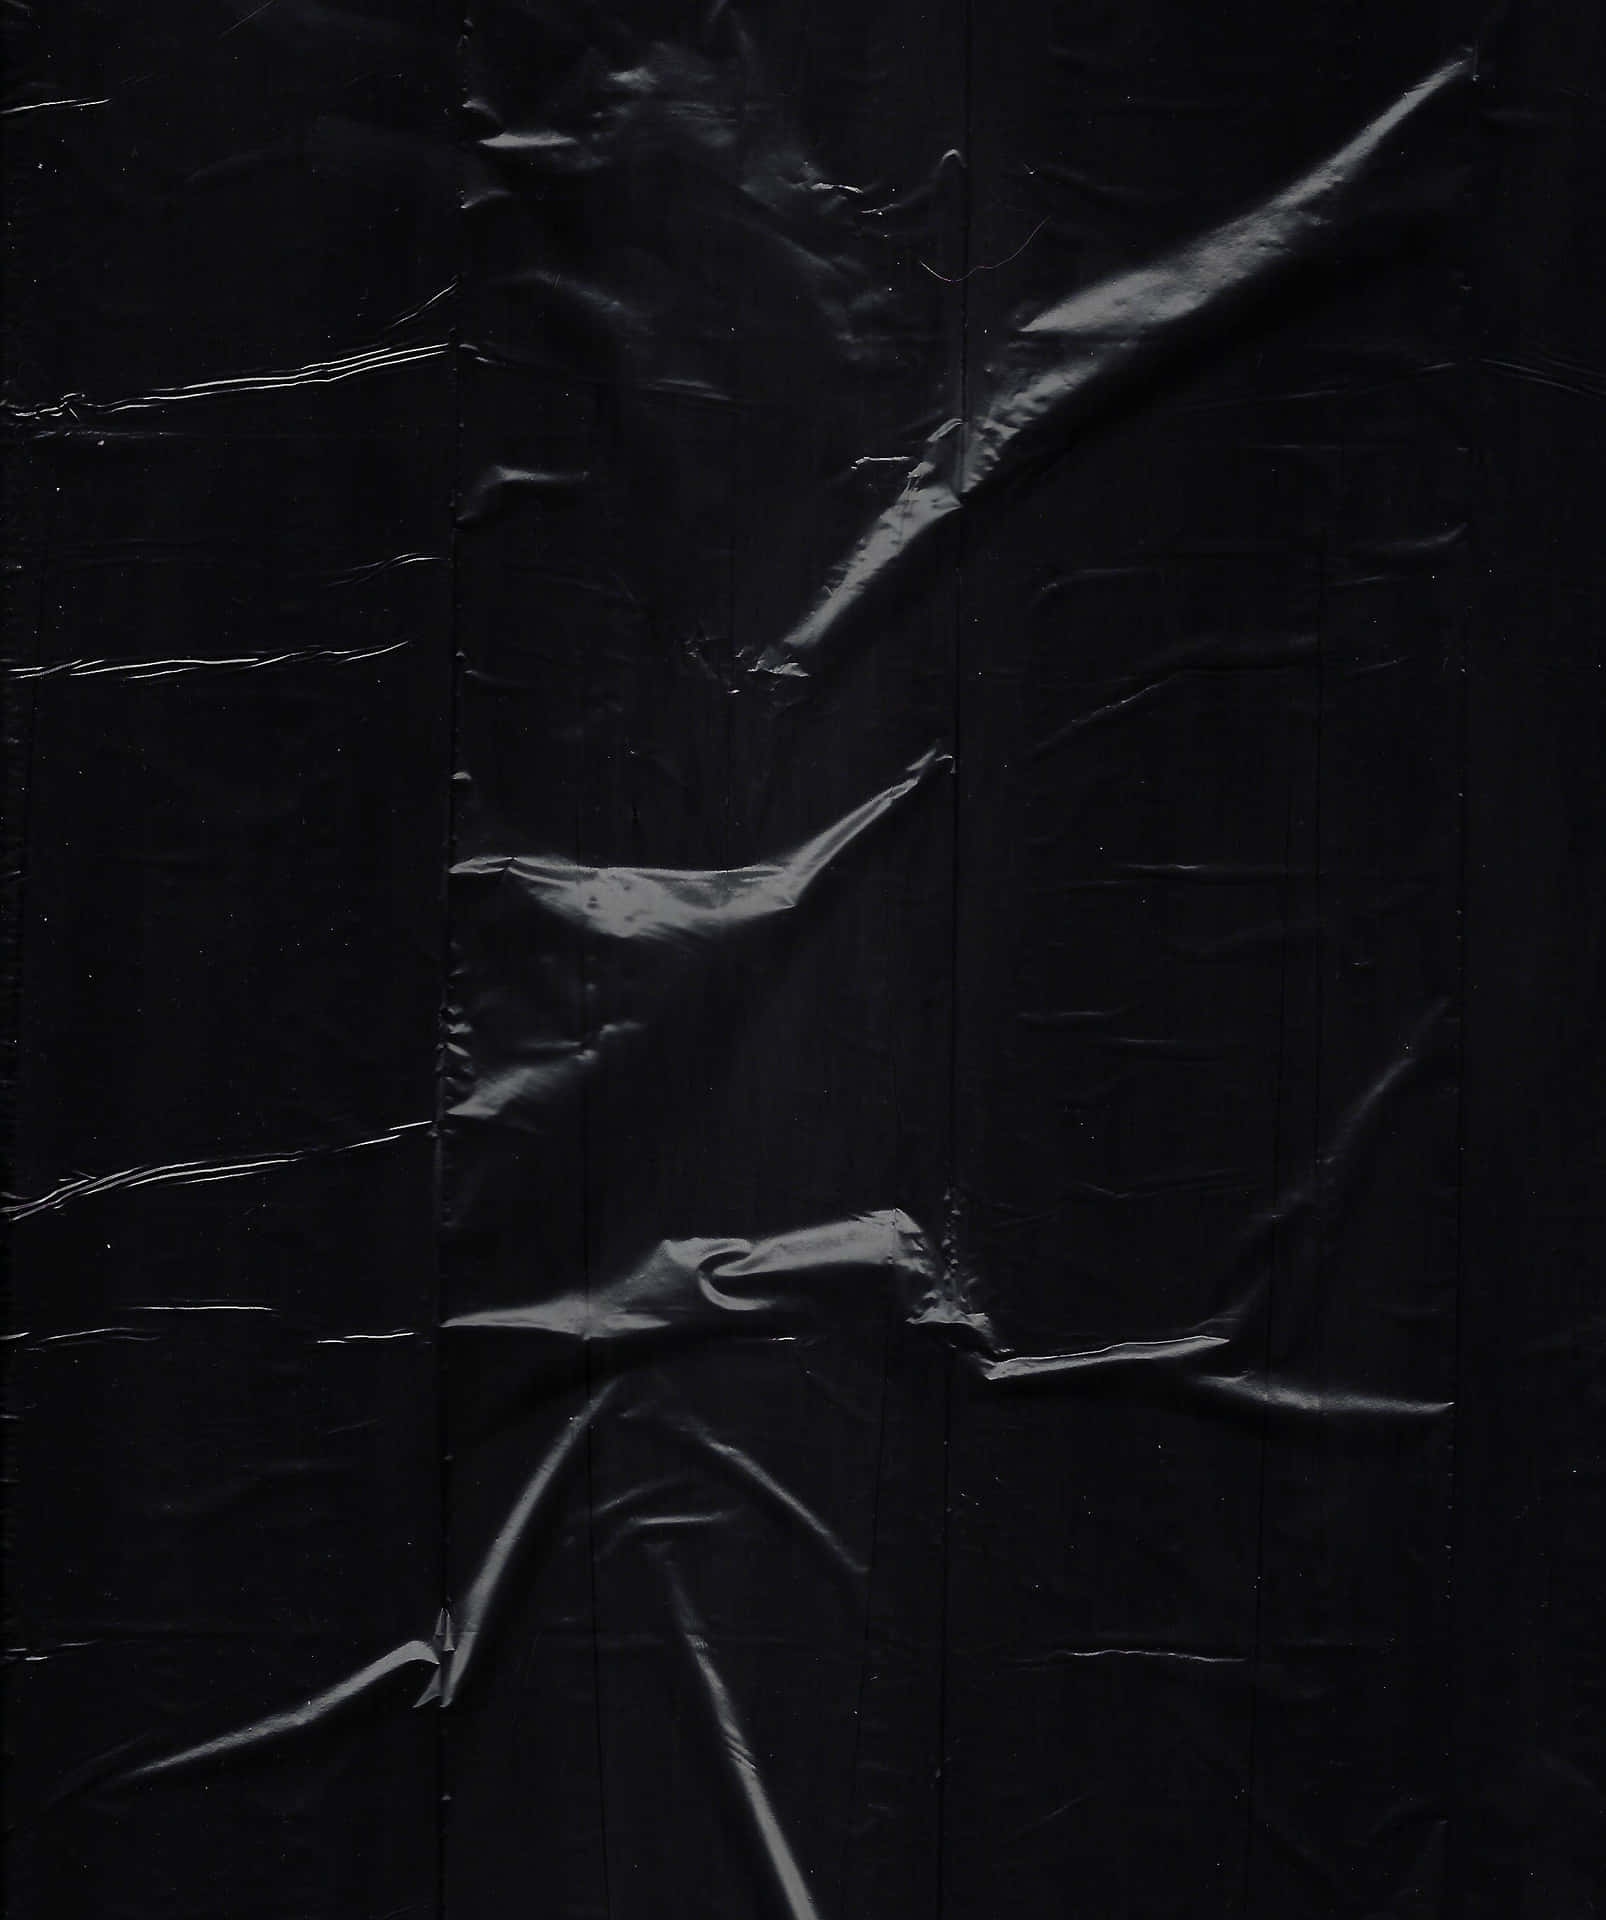 Black Plastic Wallpaper